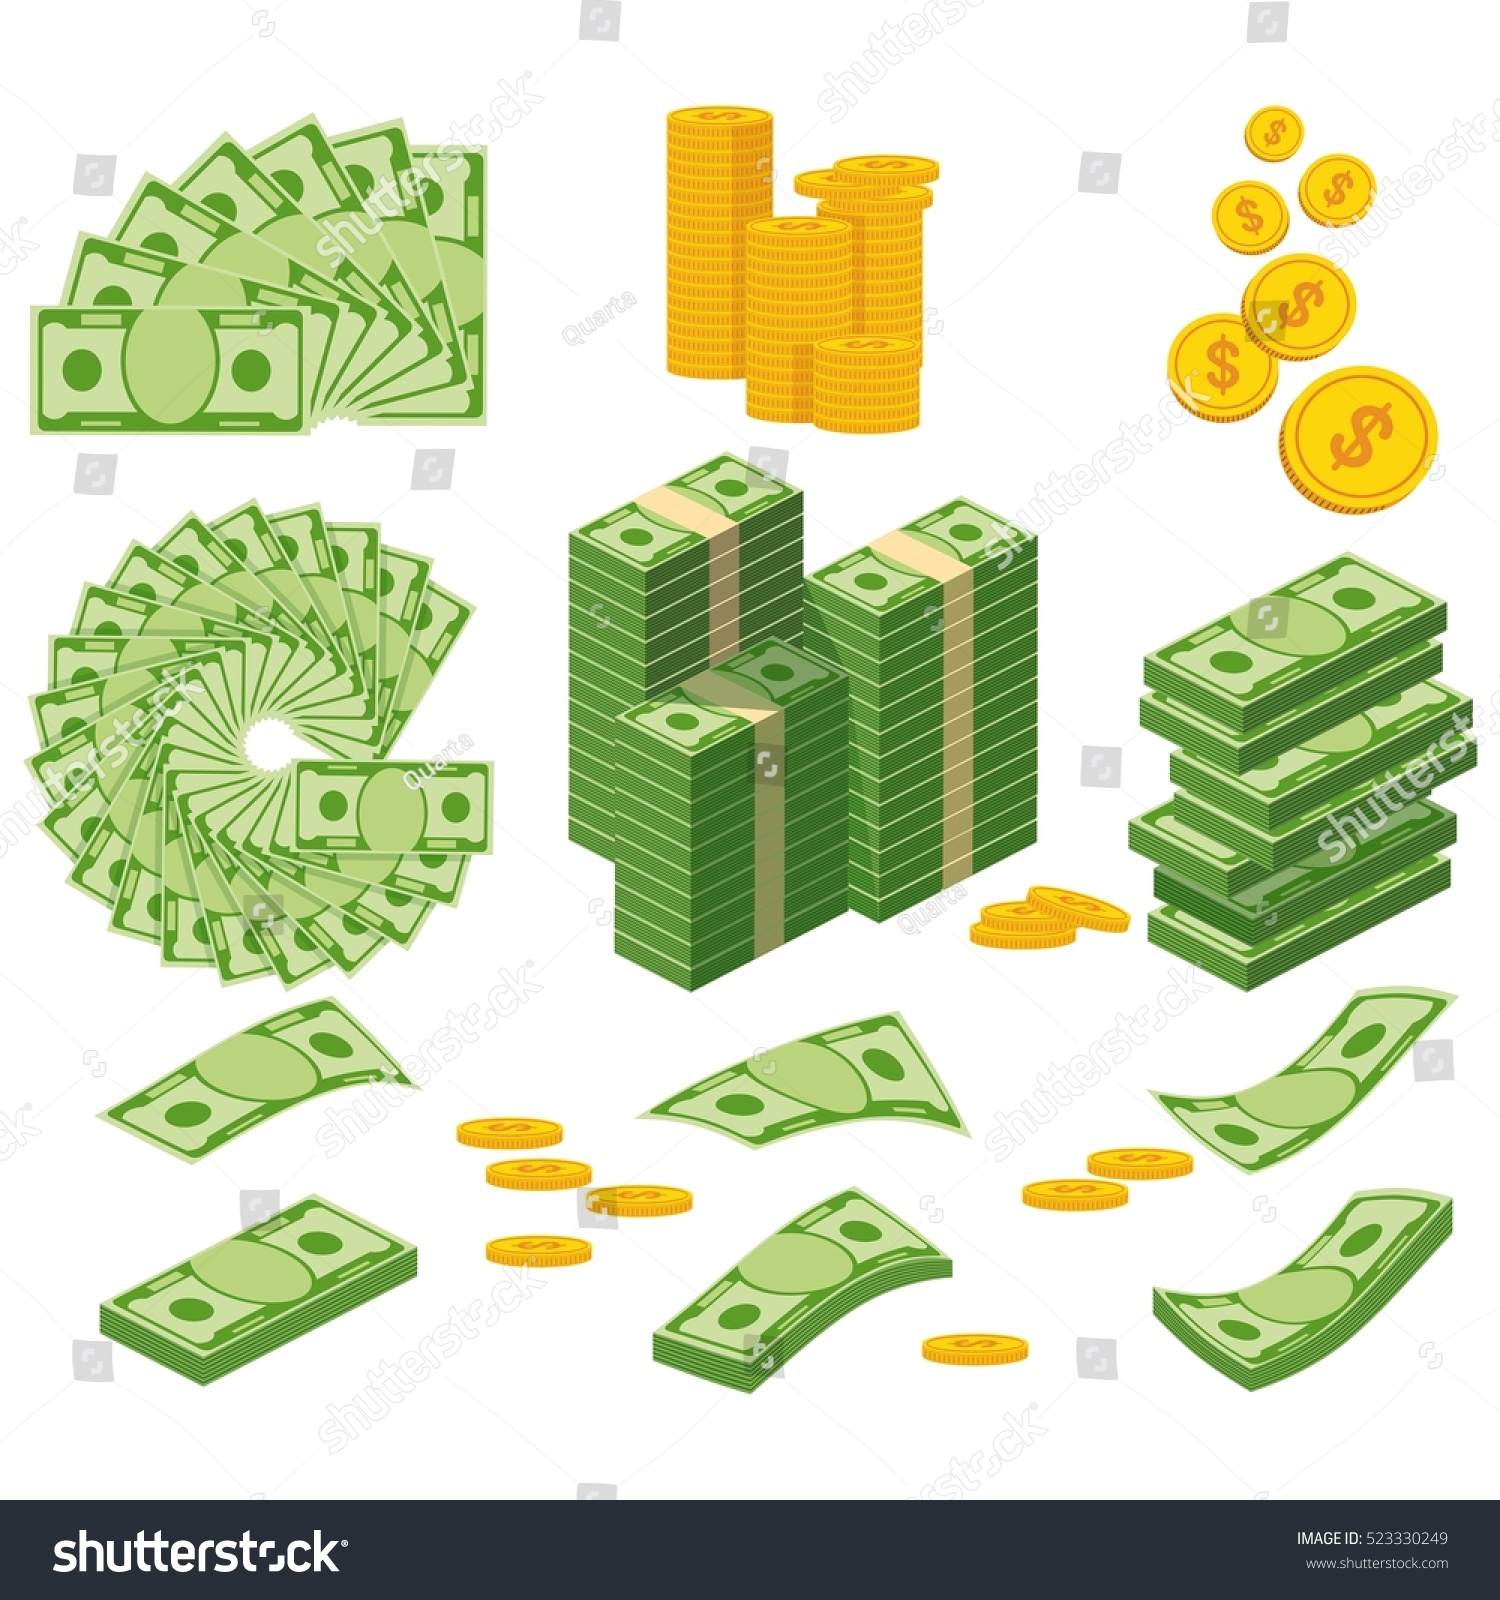 Flat иллюстрации денег